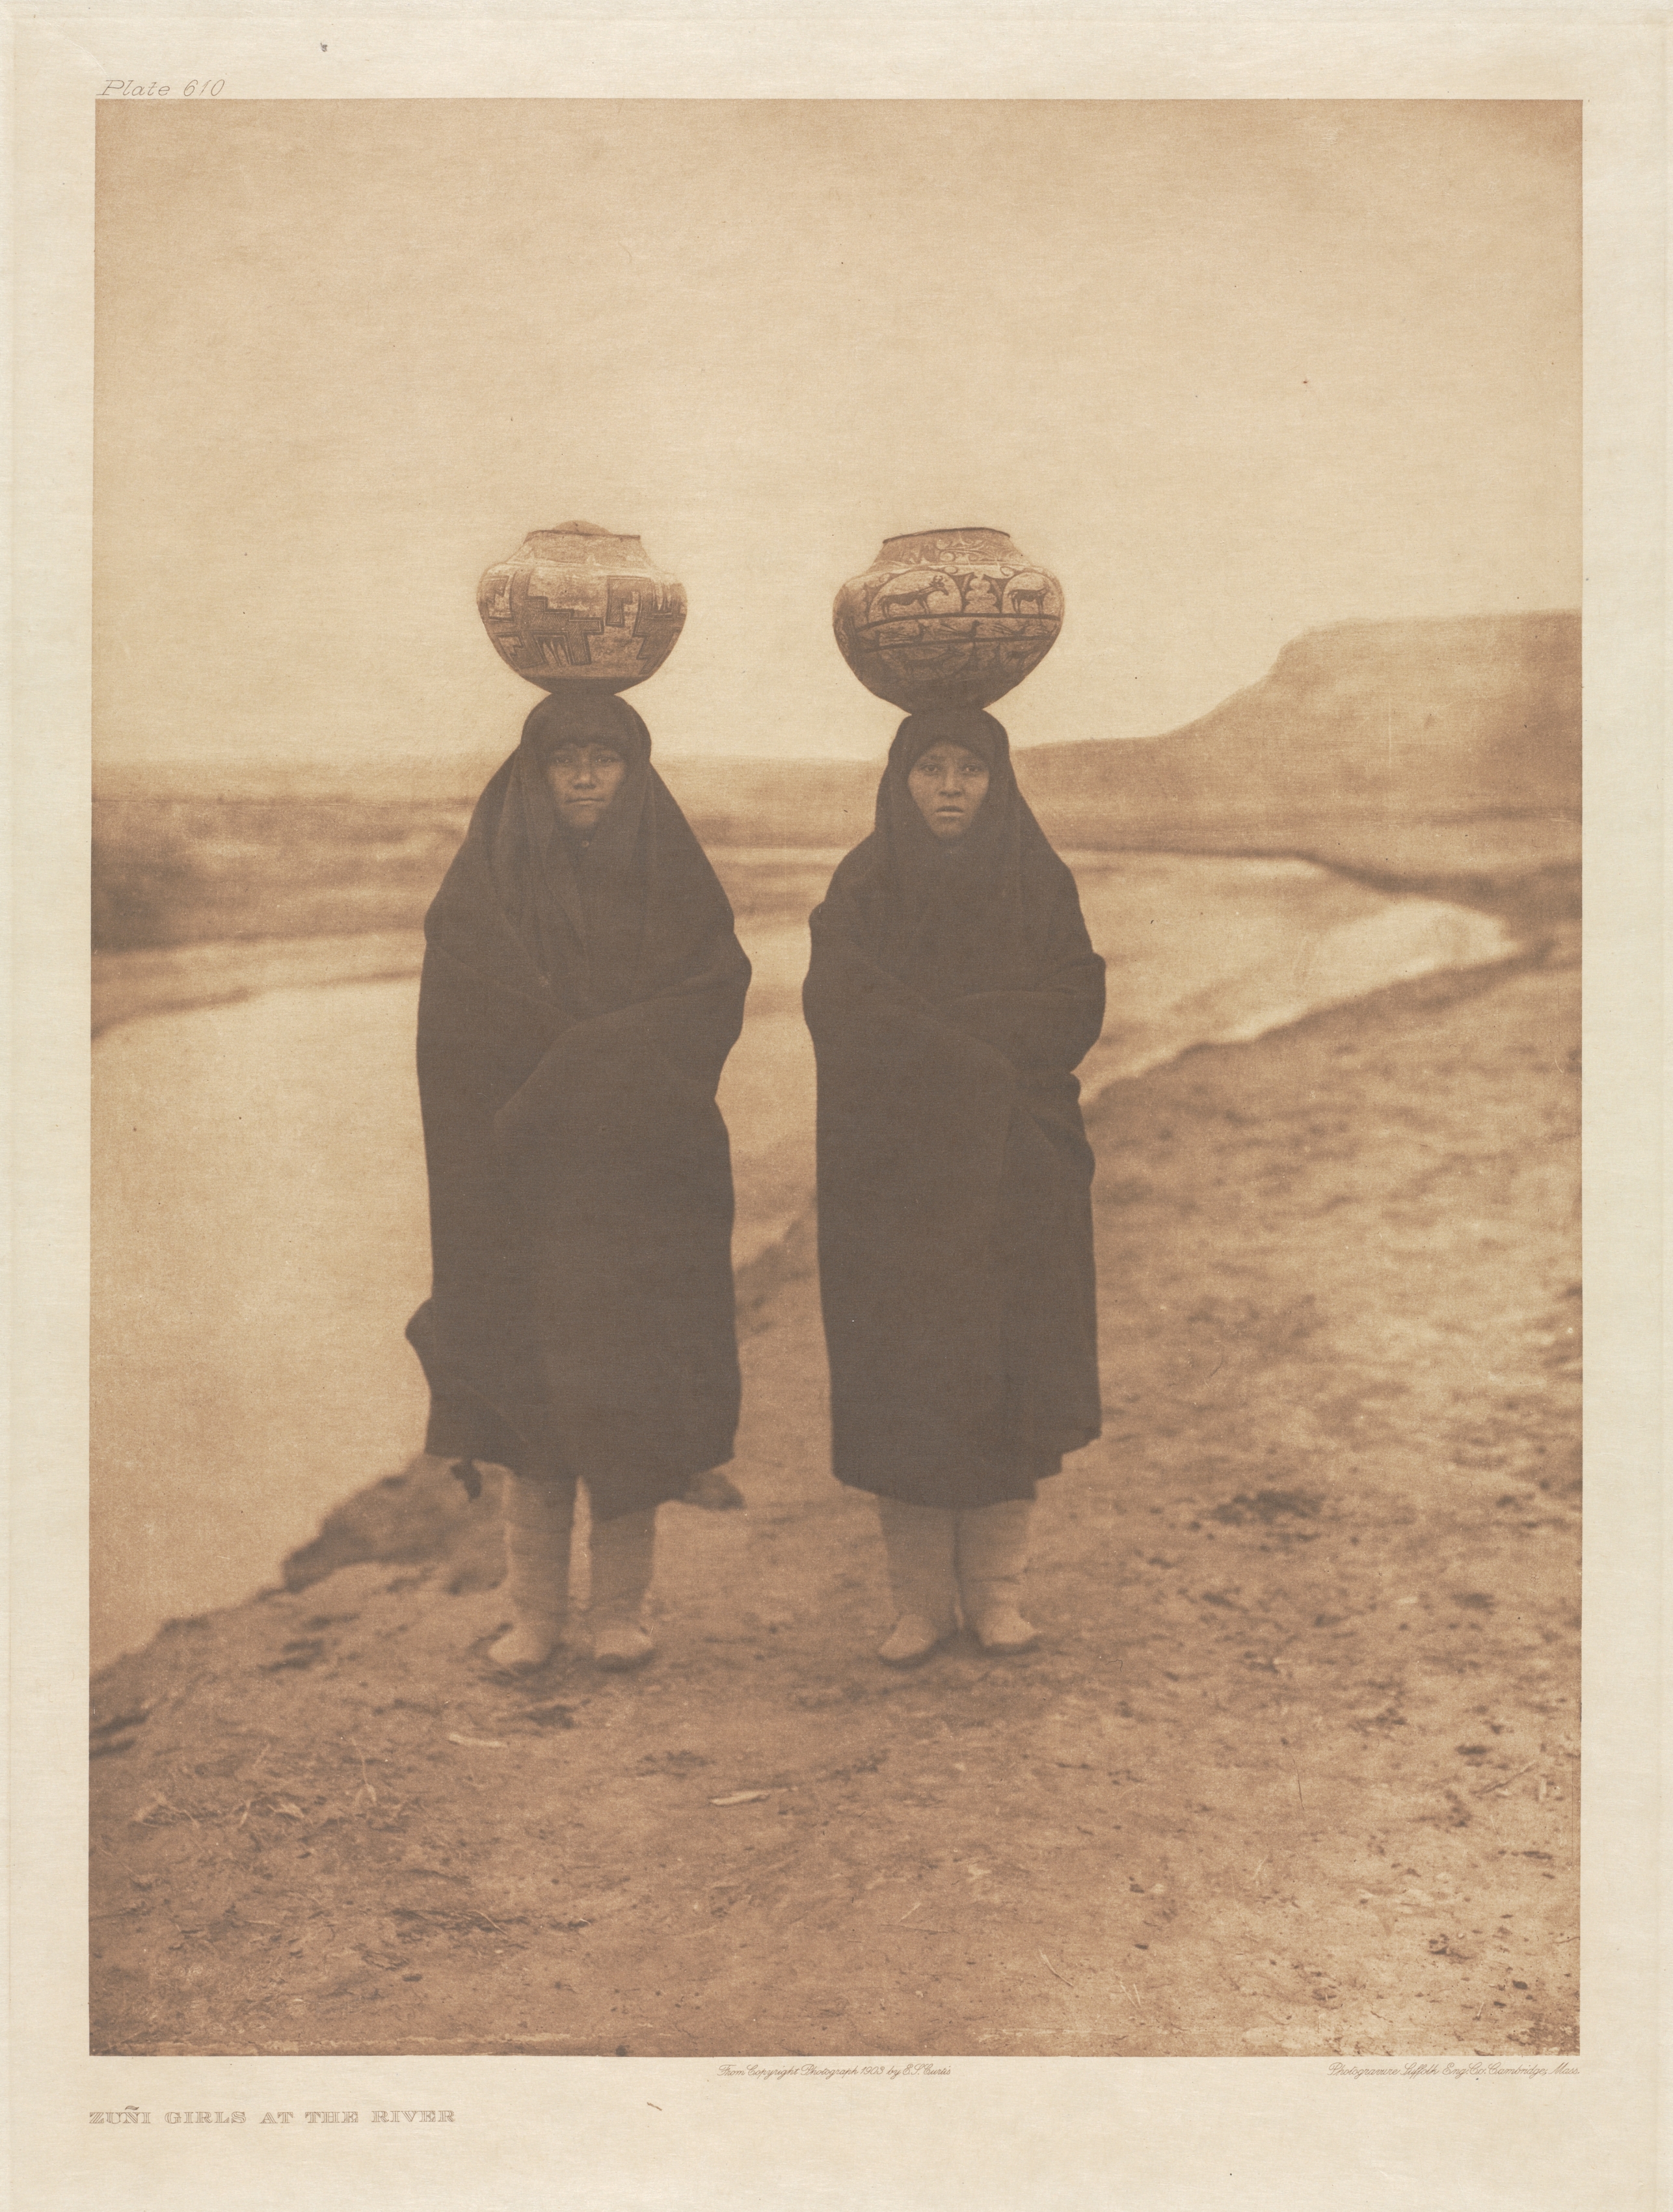 Portfolio XVII, Plate 610: Zuñi Girls at the River